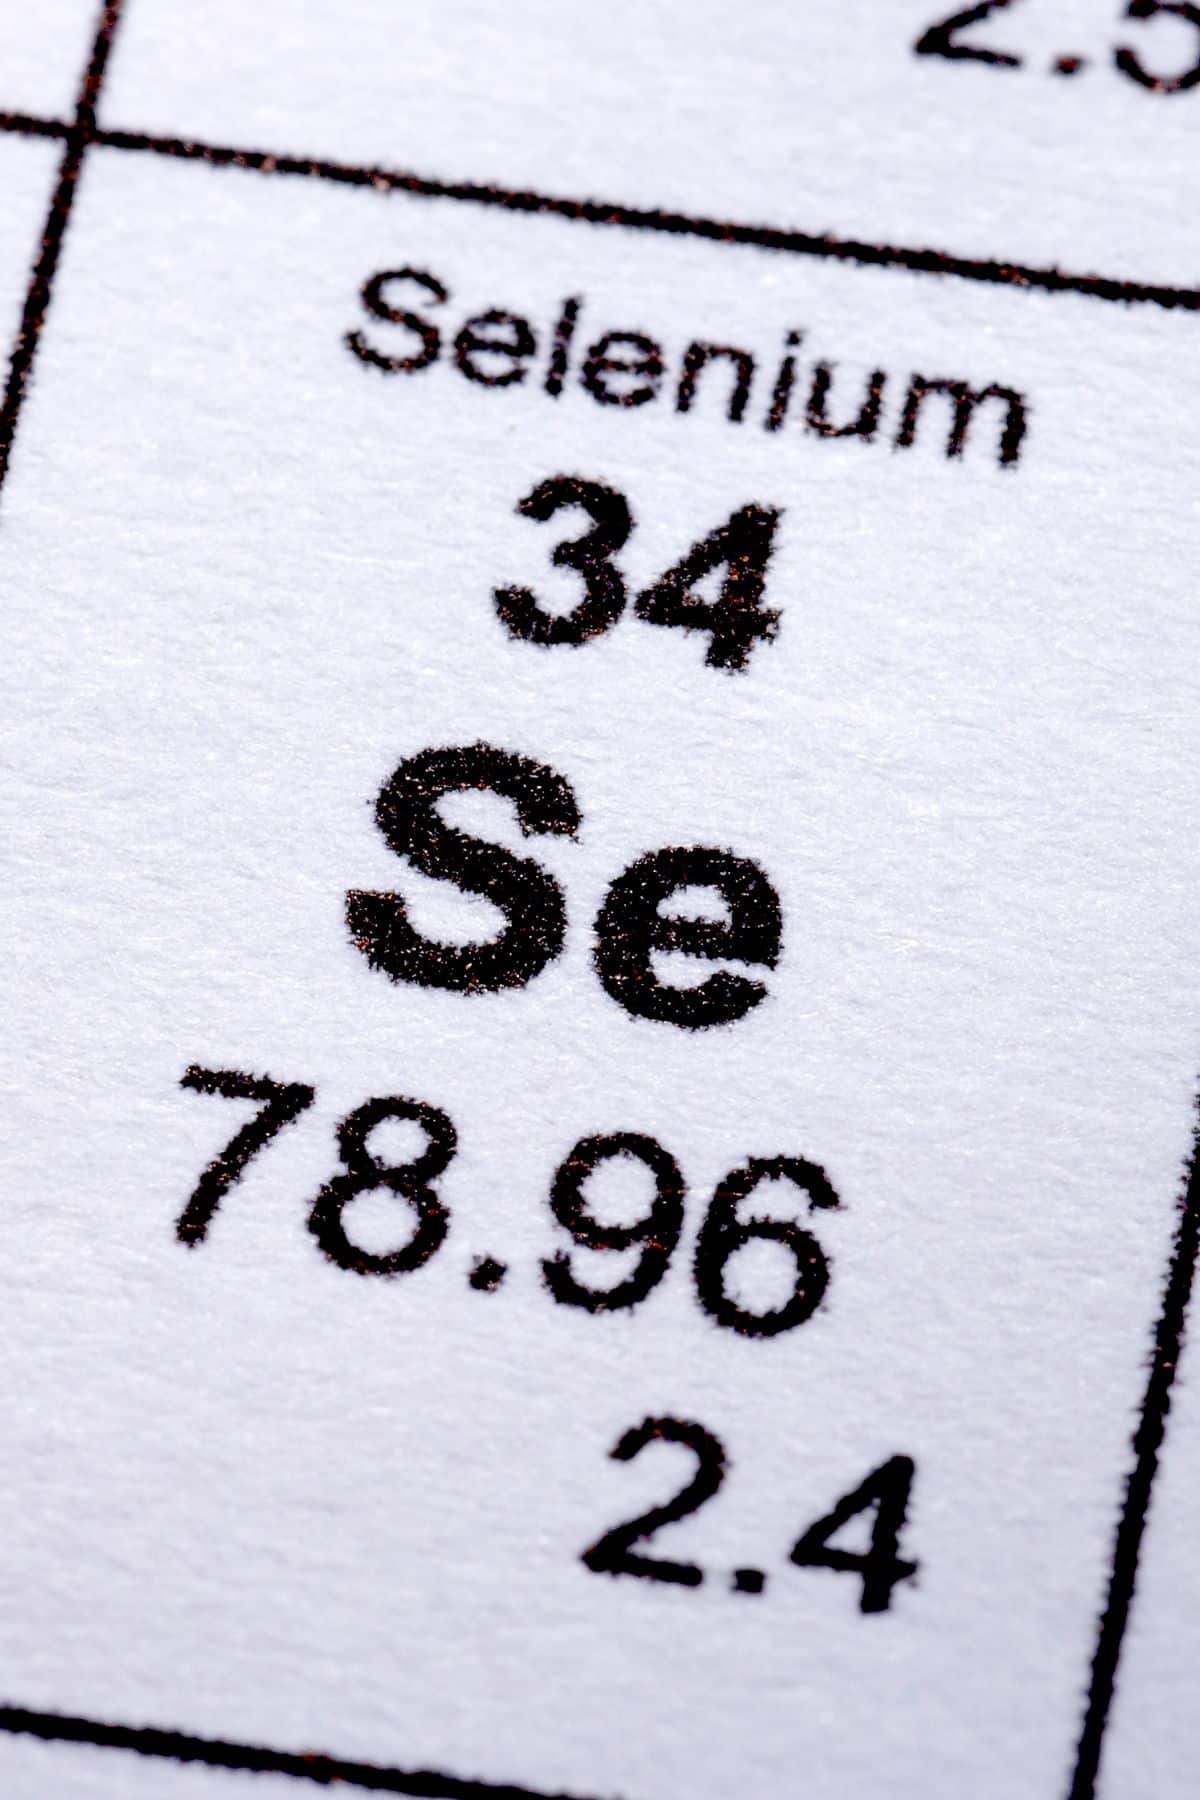 selenium on a periodic table.